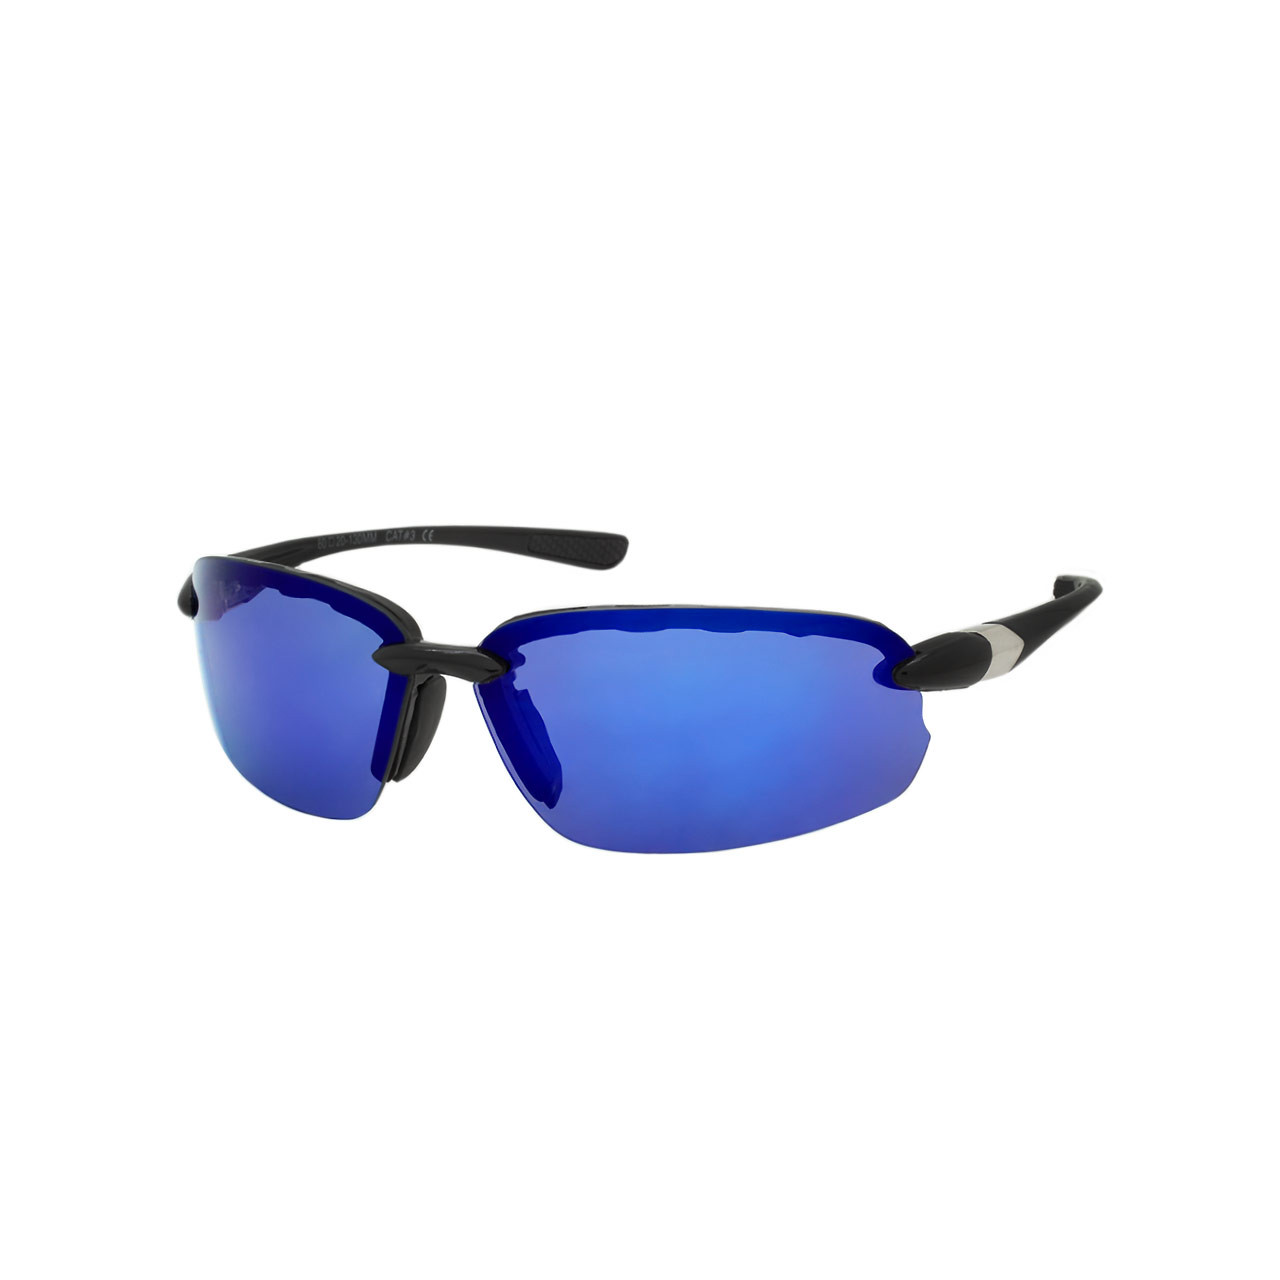 MENS SPORT SUNGLASSES WHOLESALE I ASSTD. 12 PCS I GY05 - Shark Eyes, Inc. -  Wholesale Sunglasses, Reading Glasses, & Displays